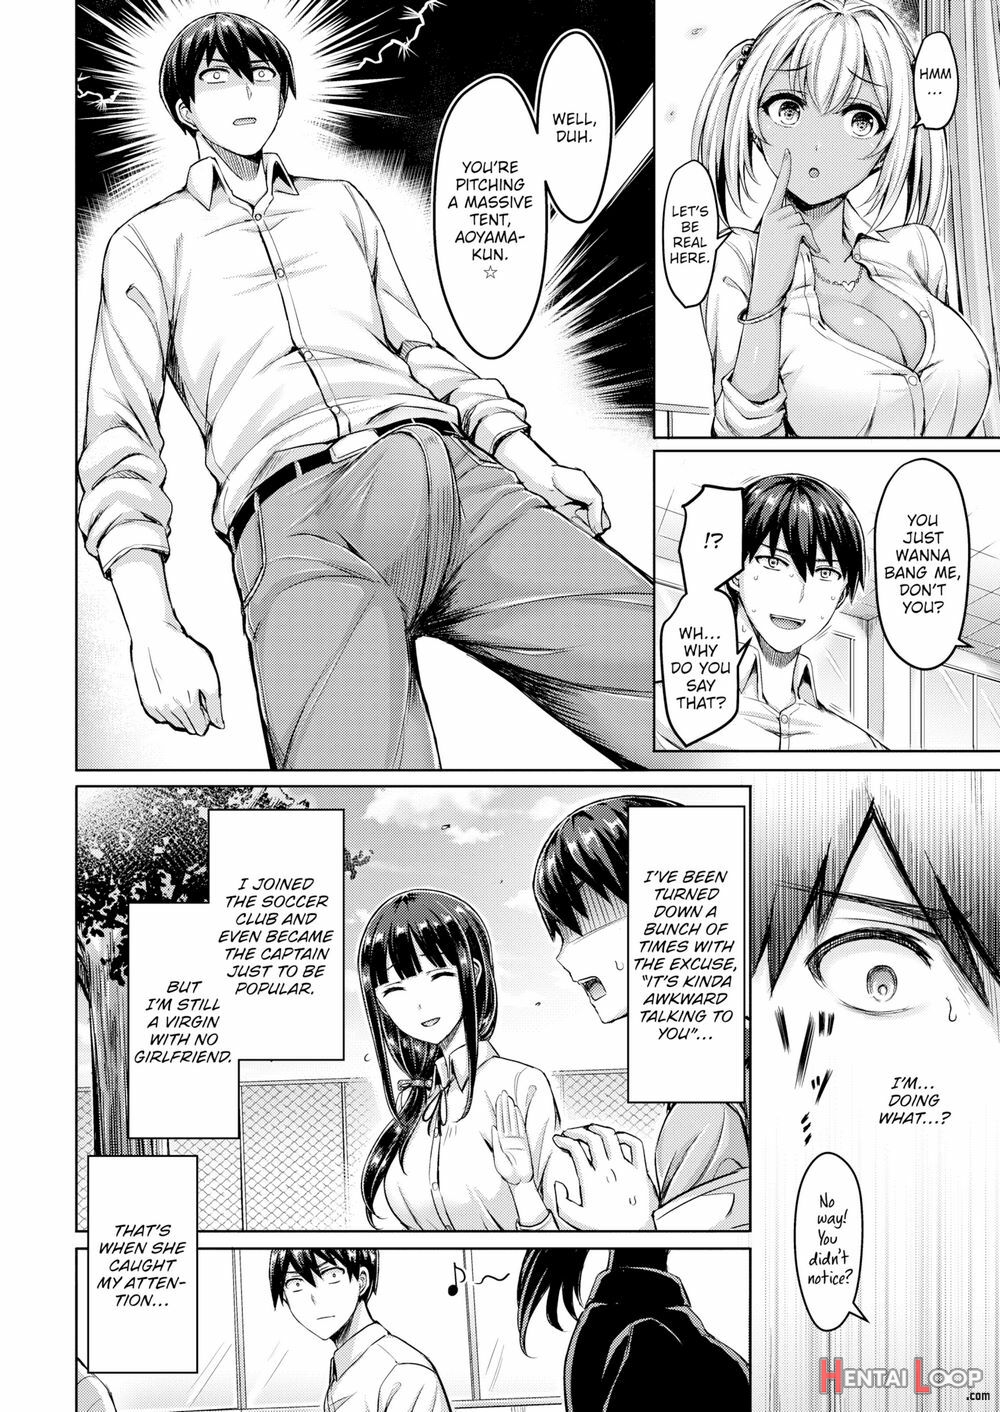 The Real Minori-chan page 2